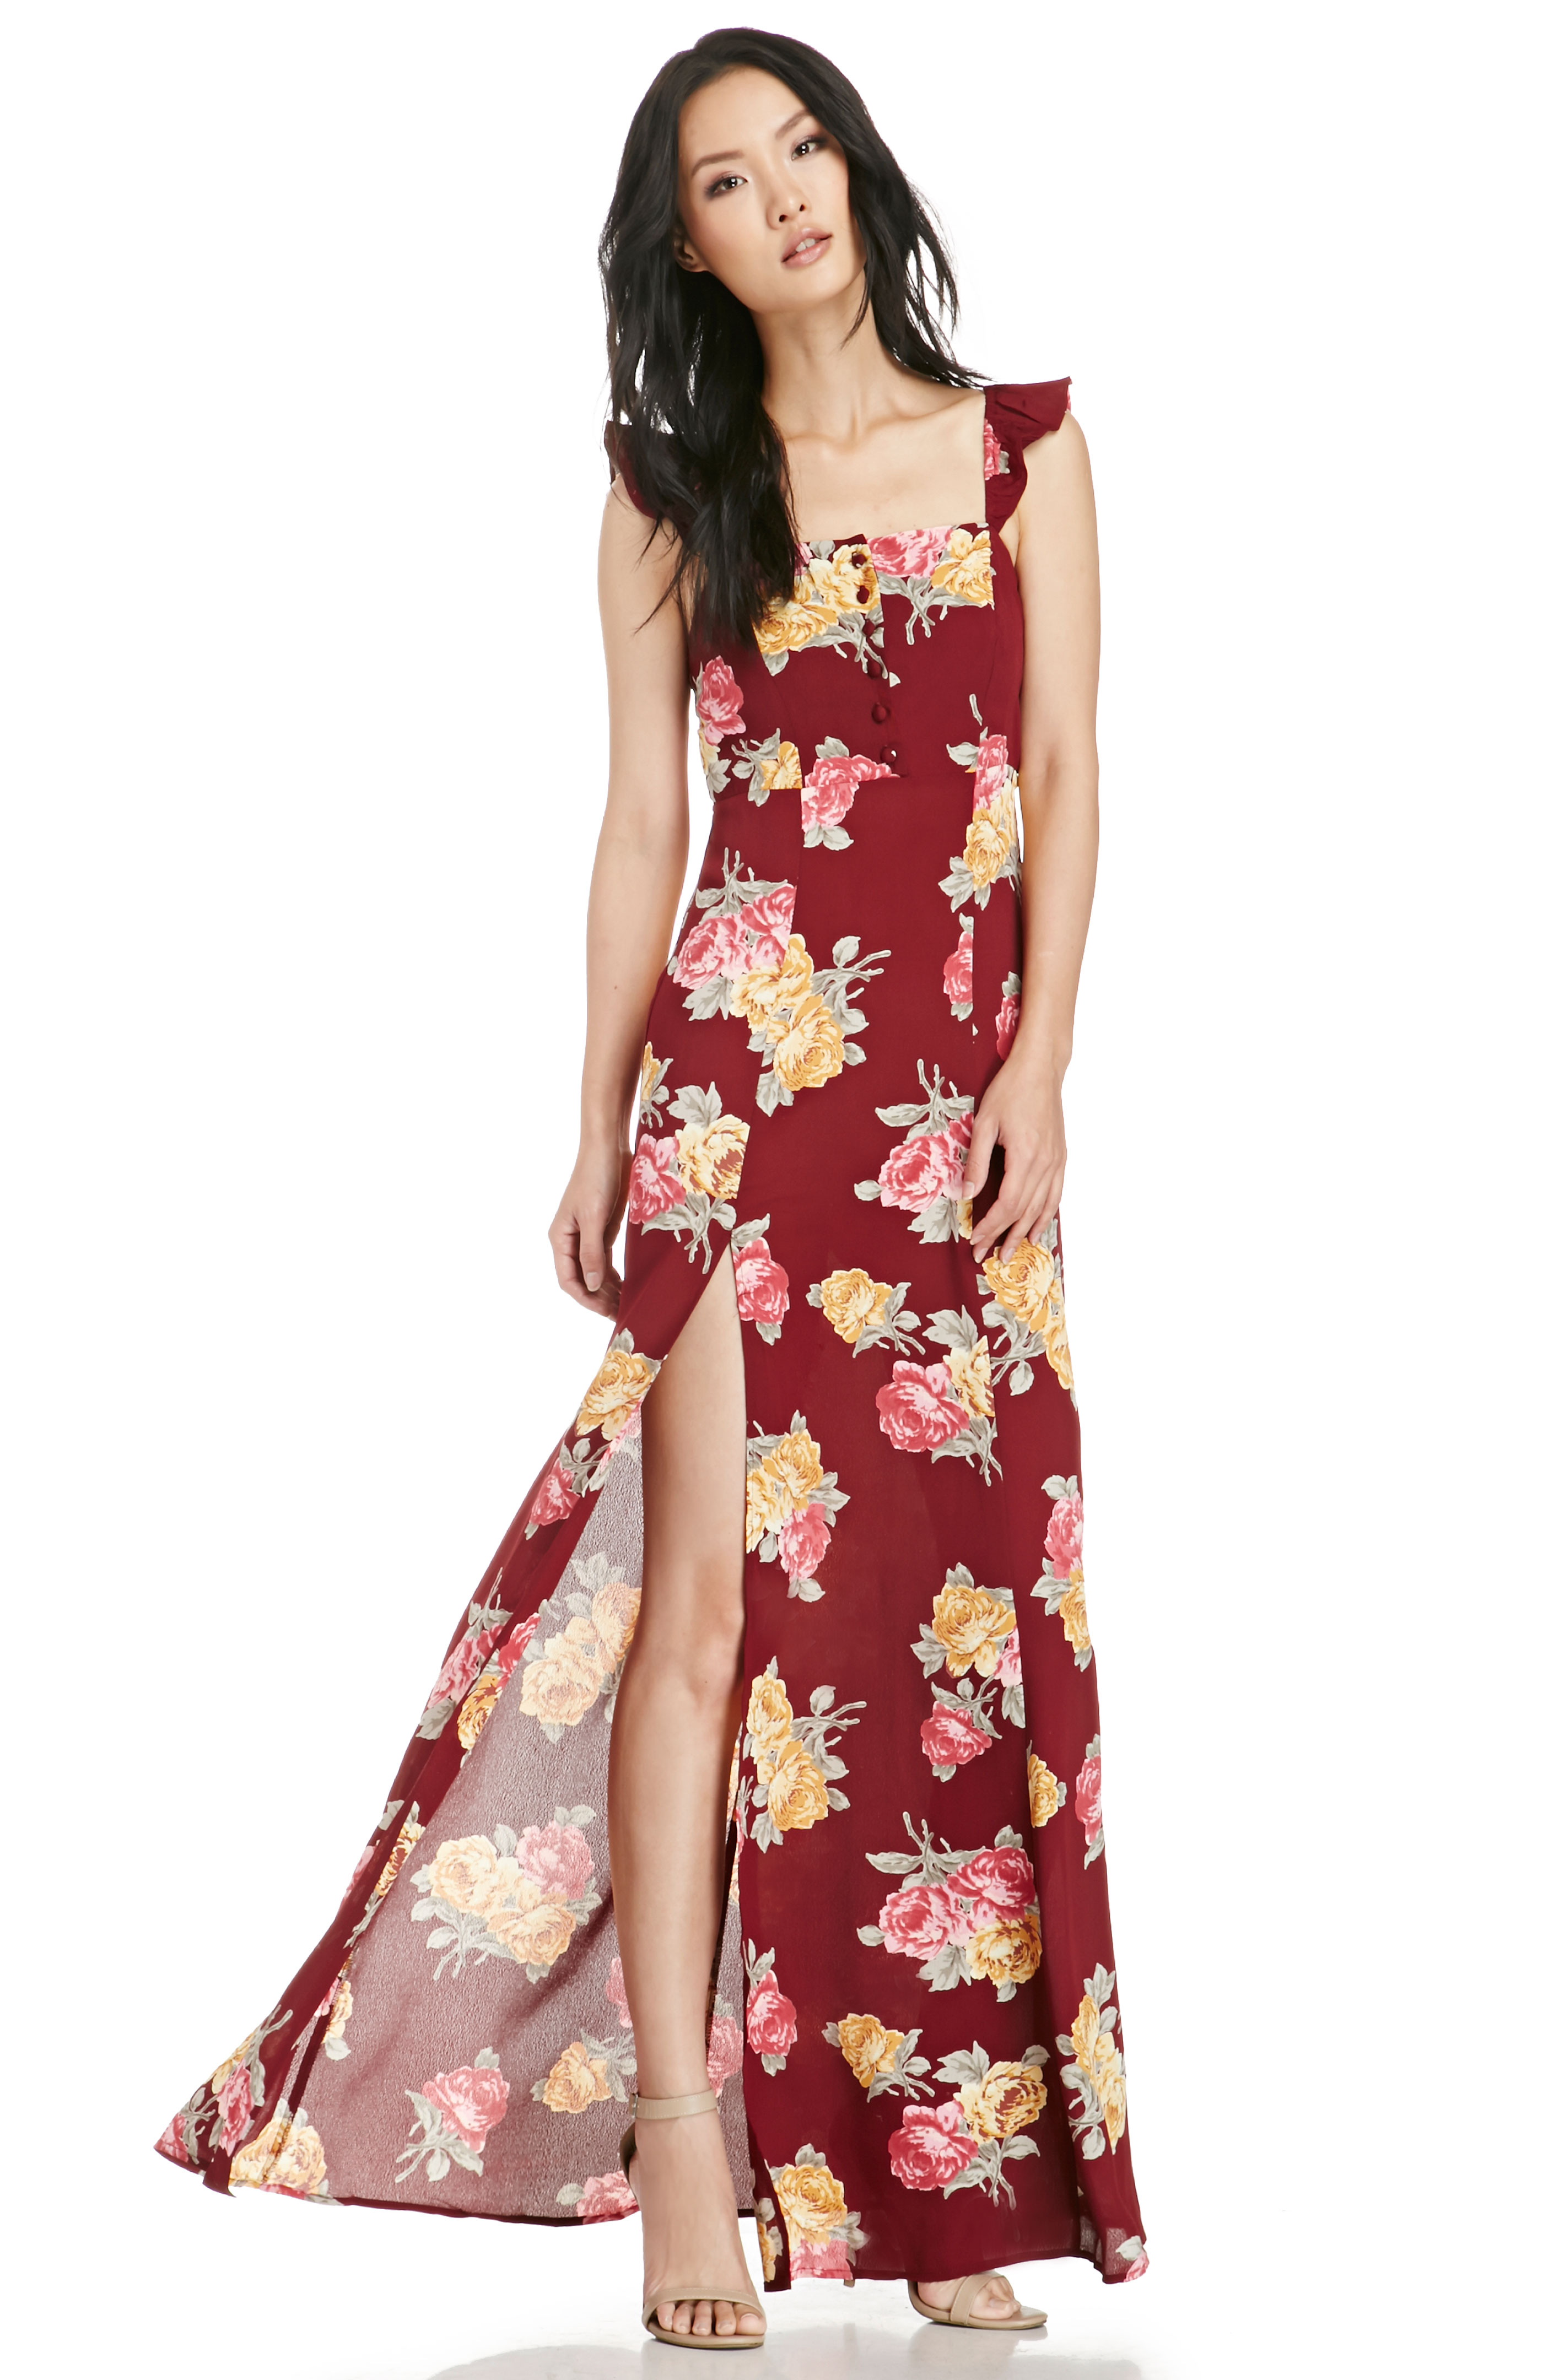 FLYNN SKYE Floral Bardot Maxi Dress in Burgundy | DAILYLOOK